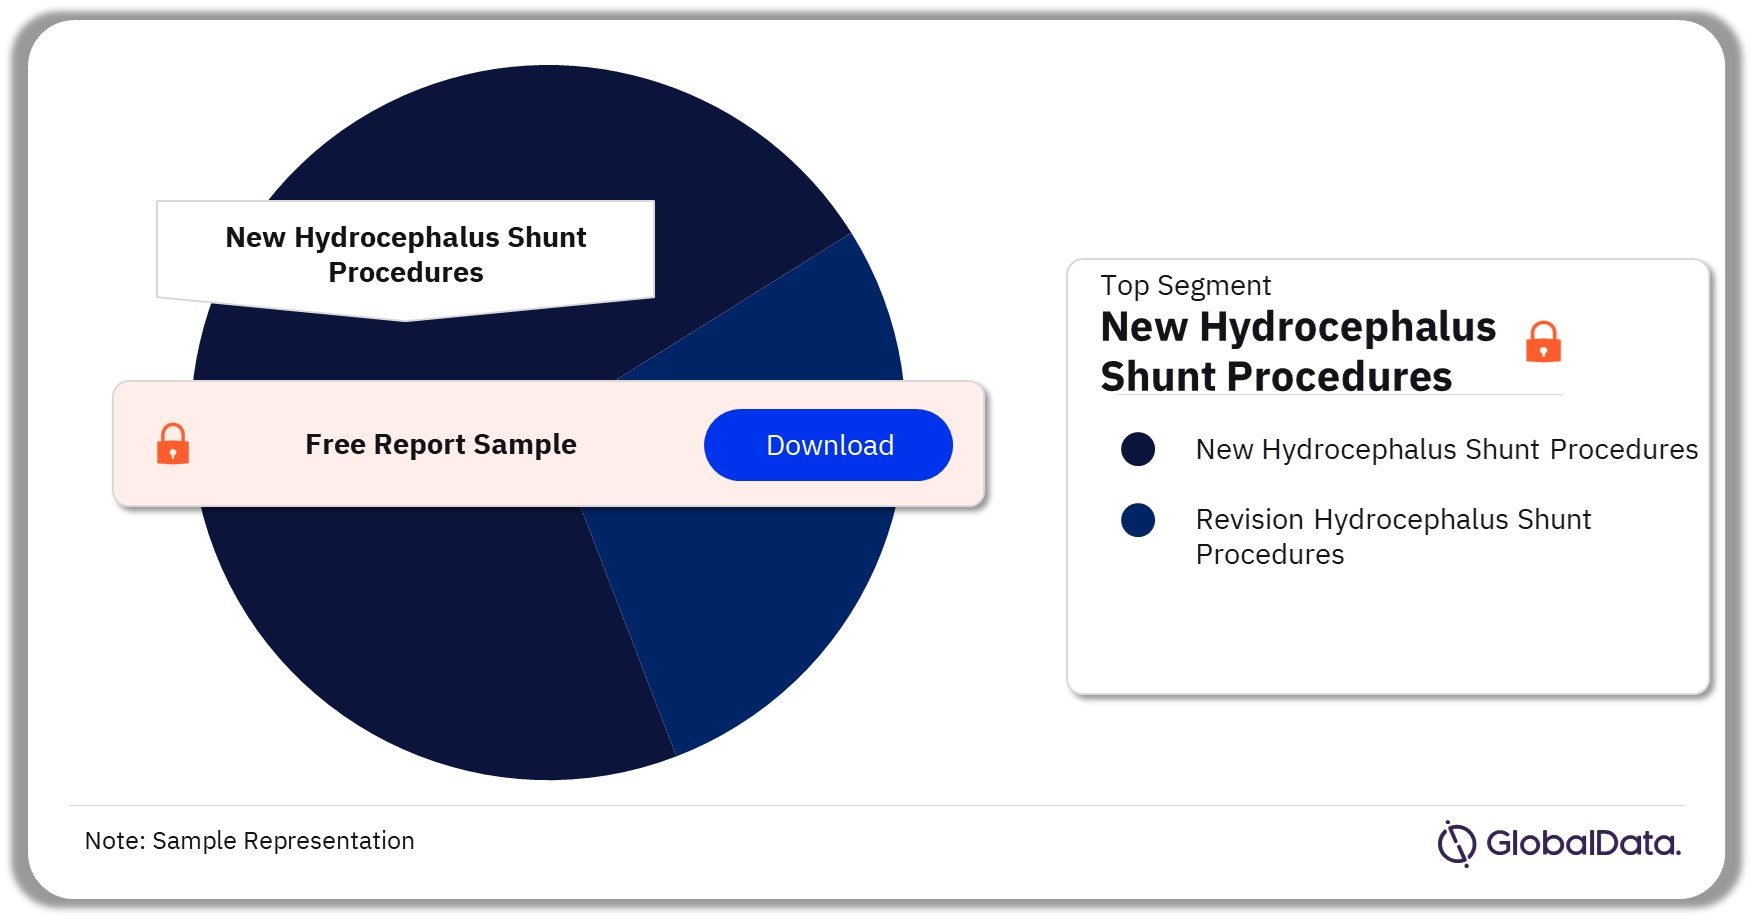 India Hydrocephalus Shunting Procedures Market Analysis by Segments, 2022 (%)